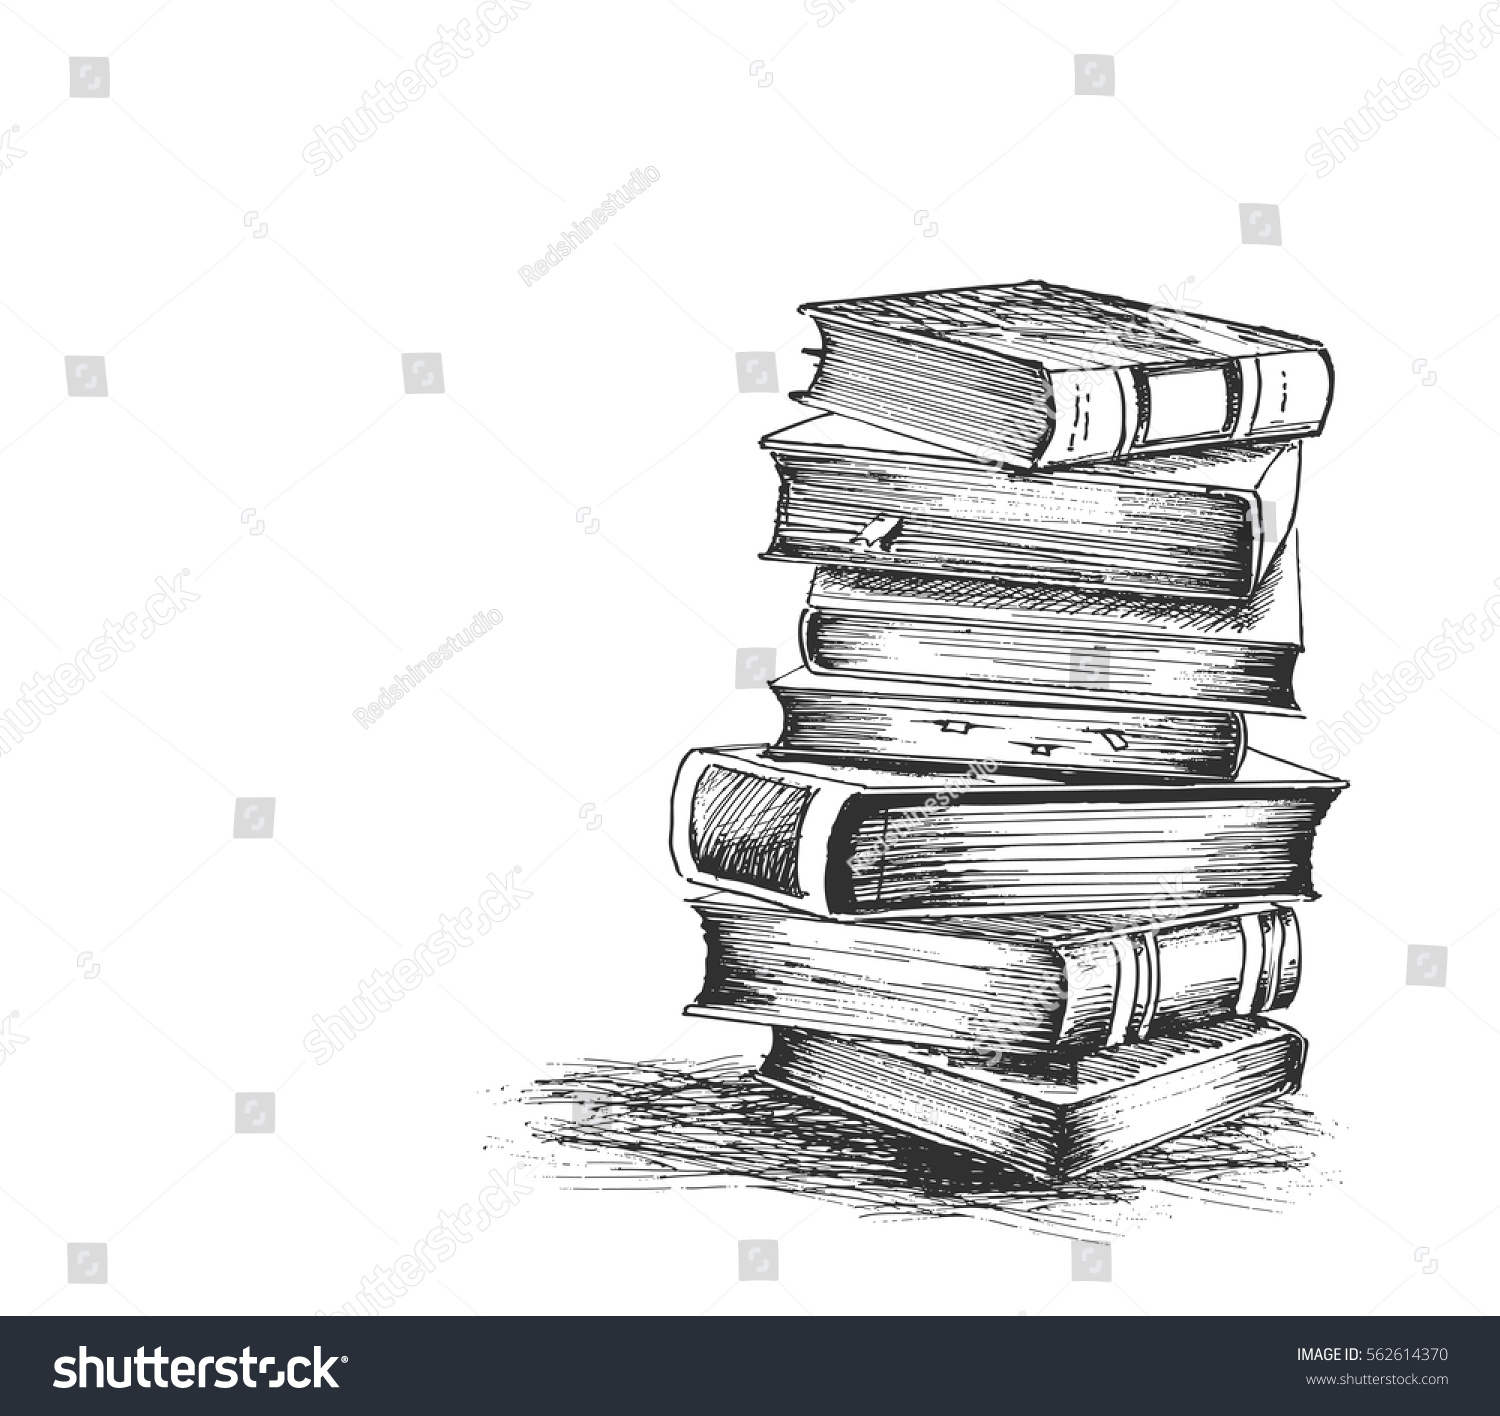 8595 Book Stack Sketch Images, Stock Photos & Vectors | Shutterstock